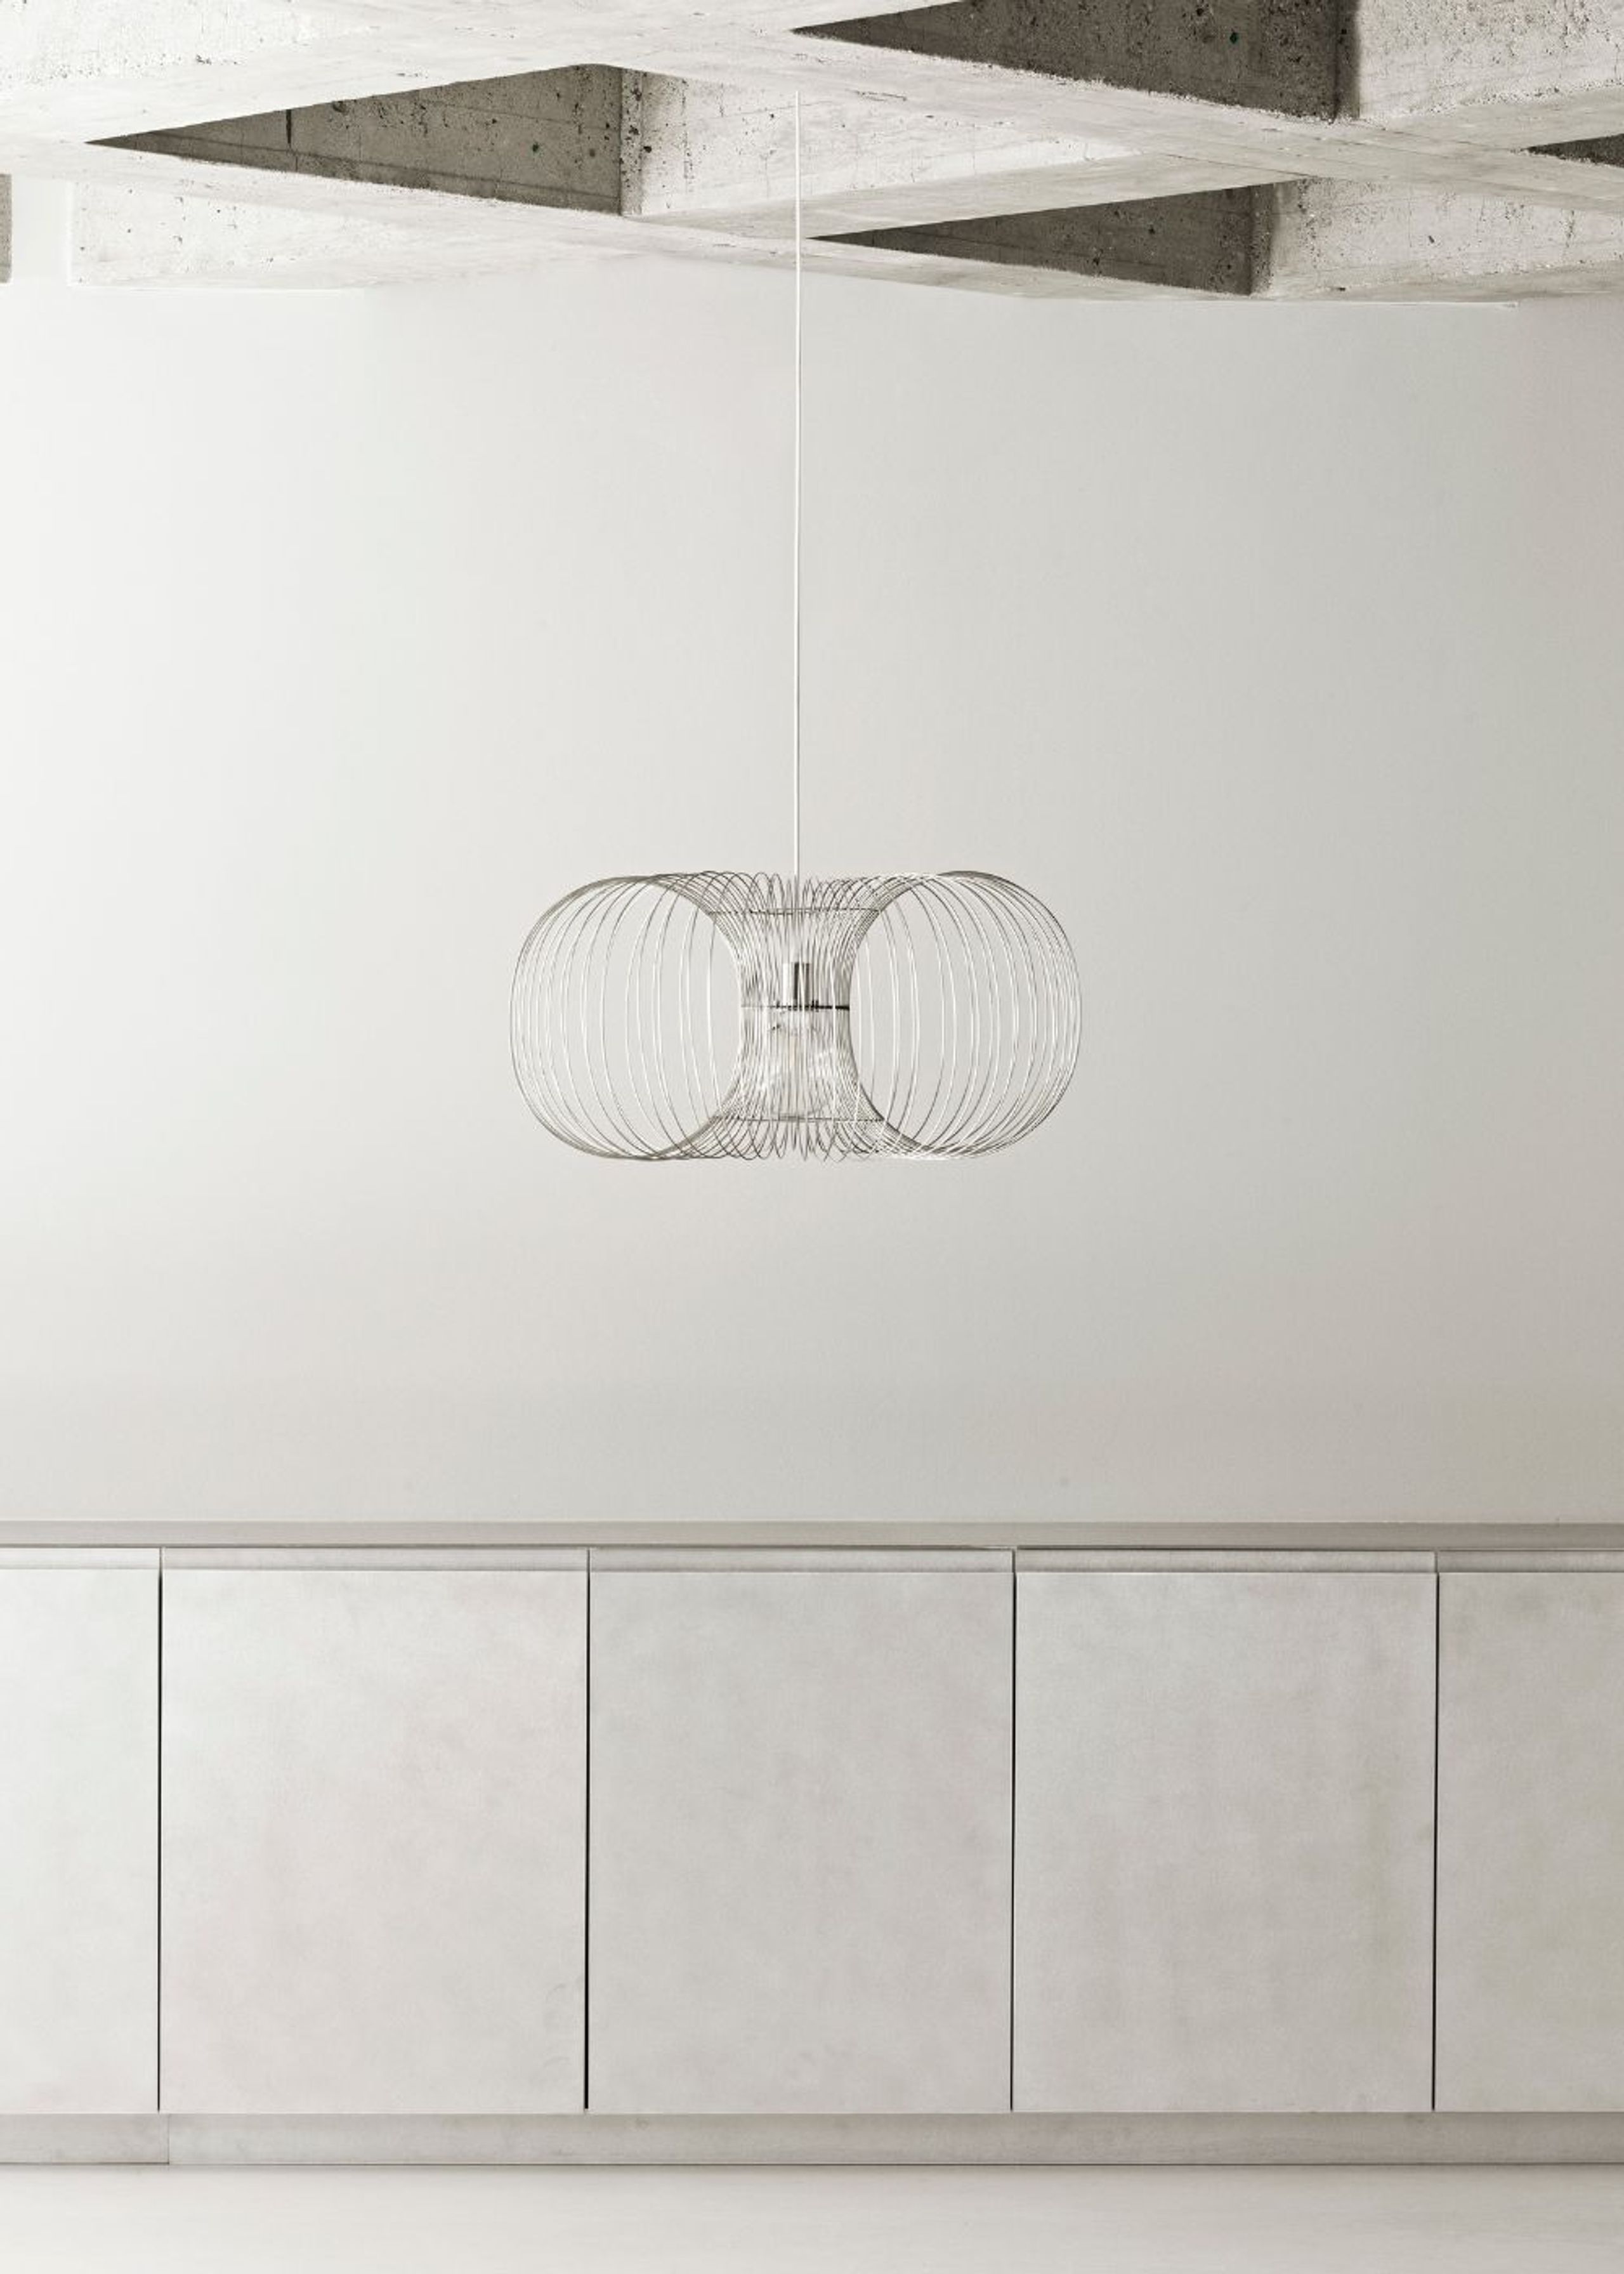 Normann Copenhagen - Pendelleuchte - Coil Lamp - Stainless Steel / L